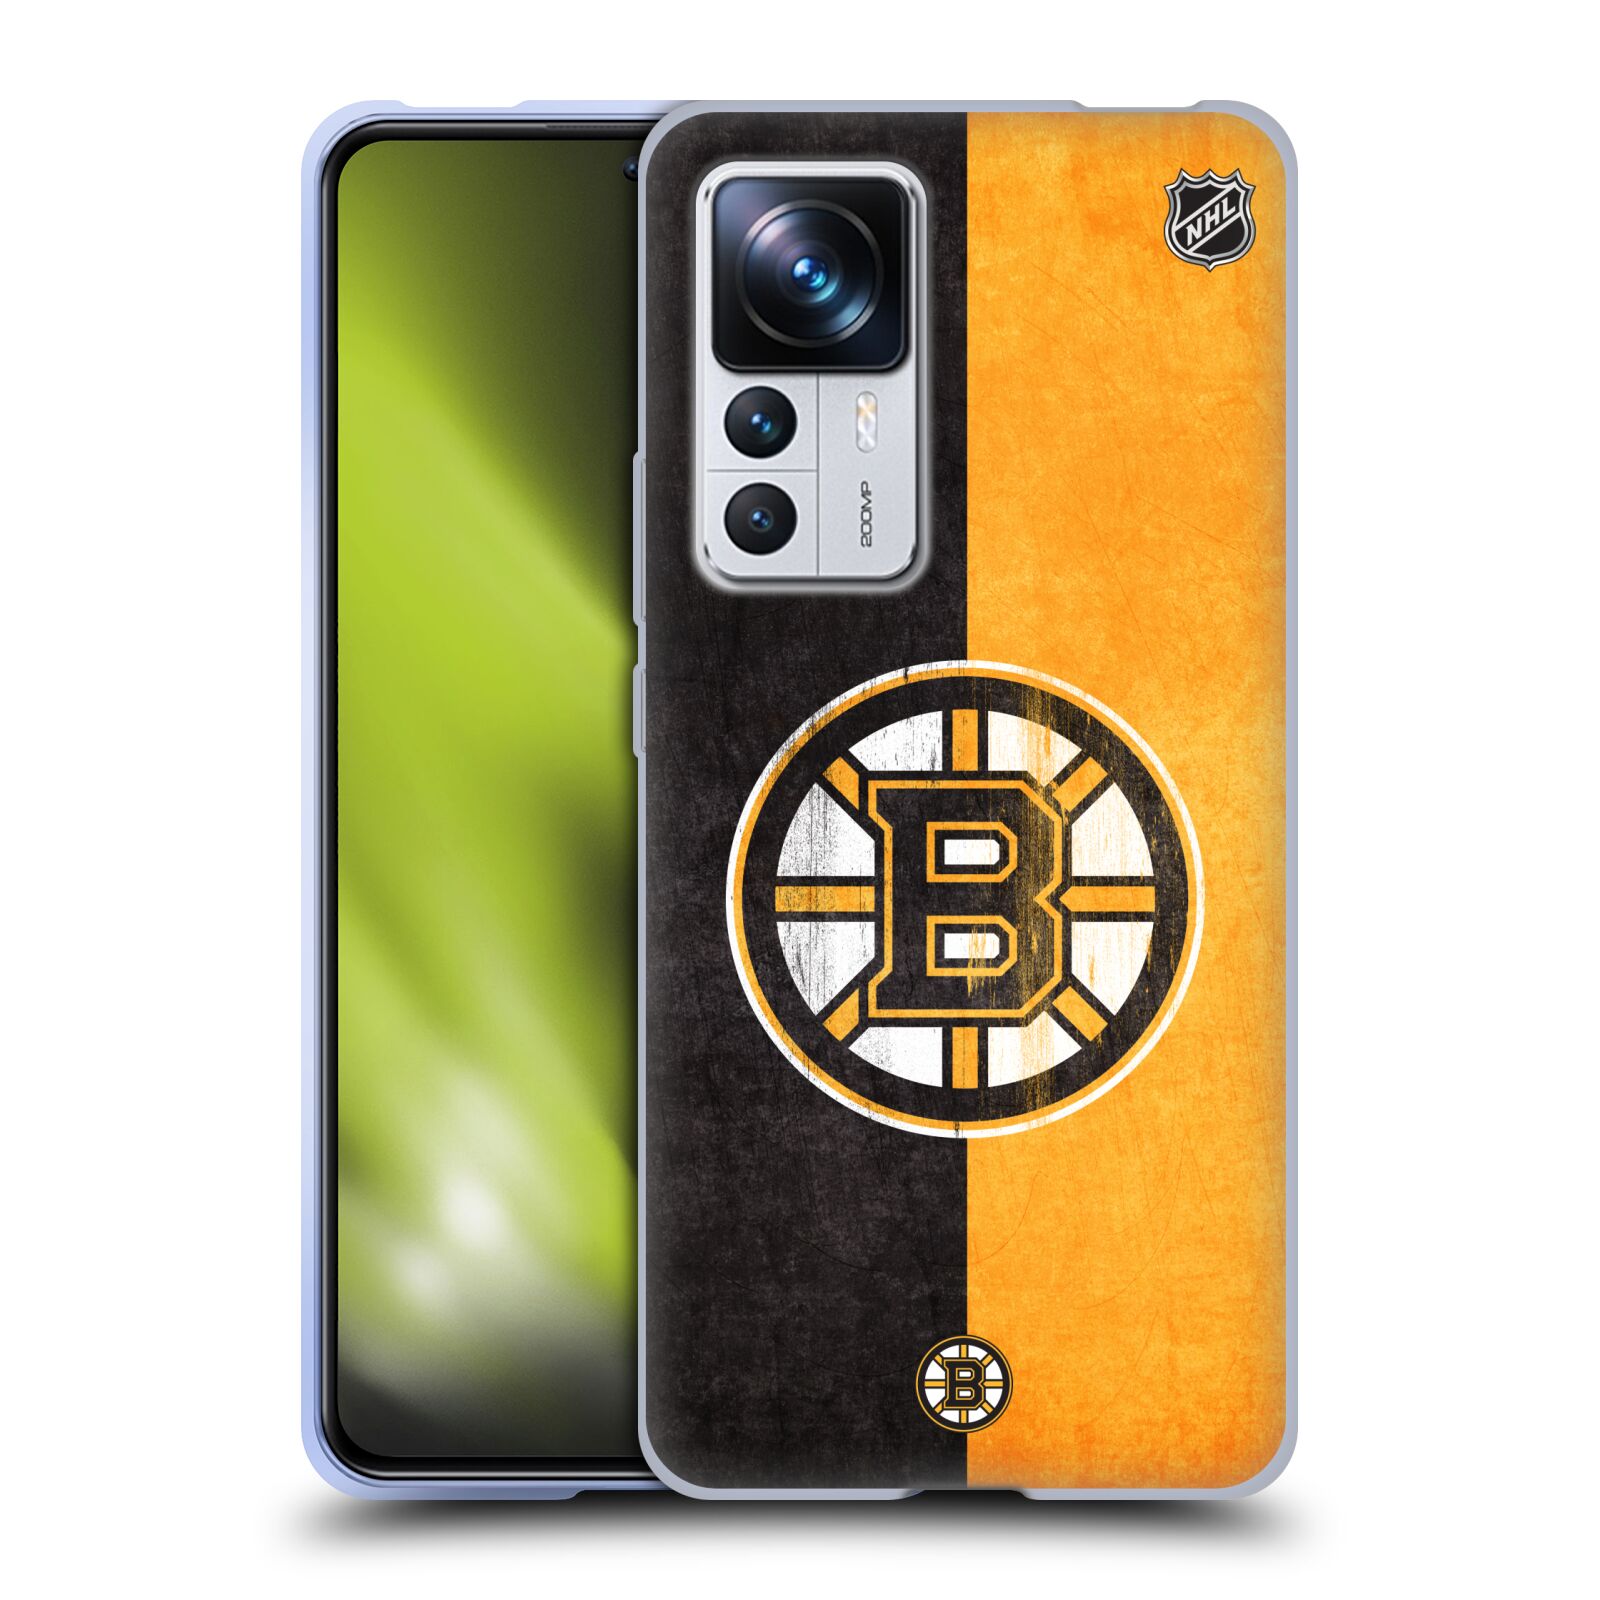 Silikonové pouzdro na mobil Xiaomi 12T / 12T Pro - NHL - Půlené logo Boston Bruins (Silikonový kryt, obal, pouzdro na mobilní telefon Xiaomi 12T / 12T Pro s licencovaným motivem NHL - Půlené logo Boston Bruins)